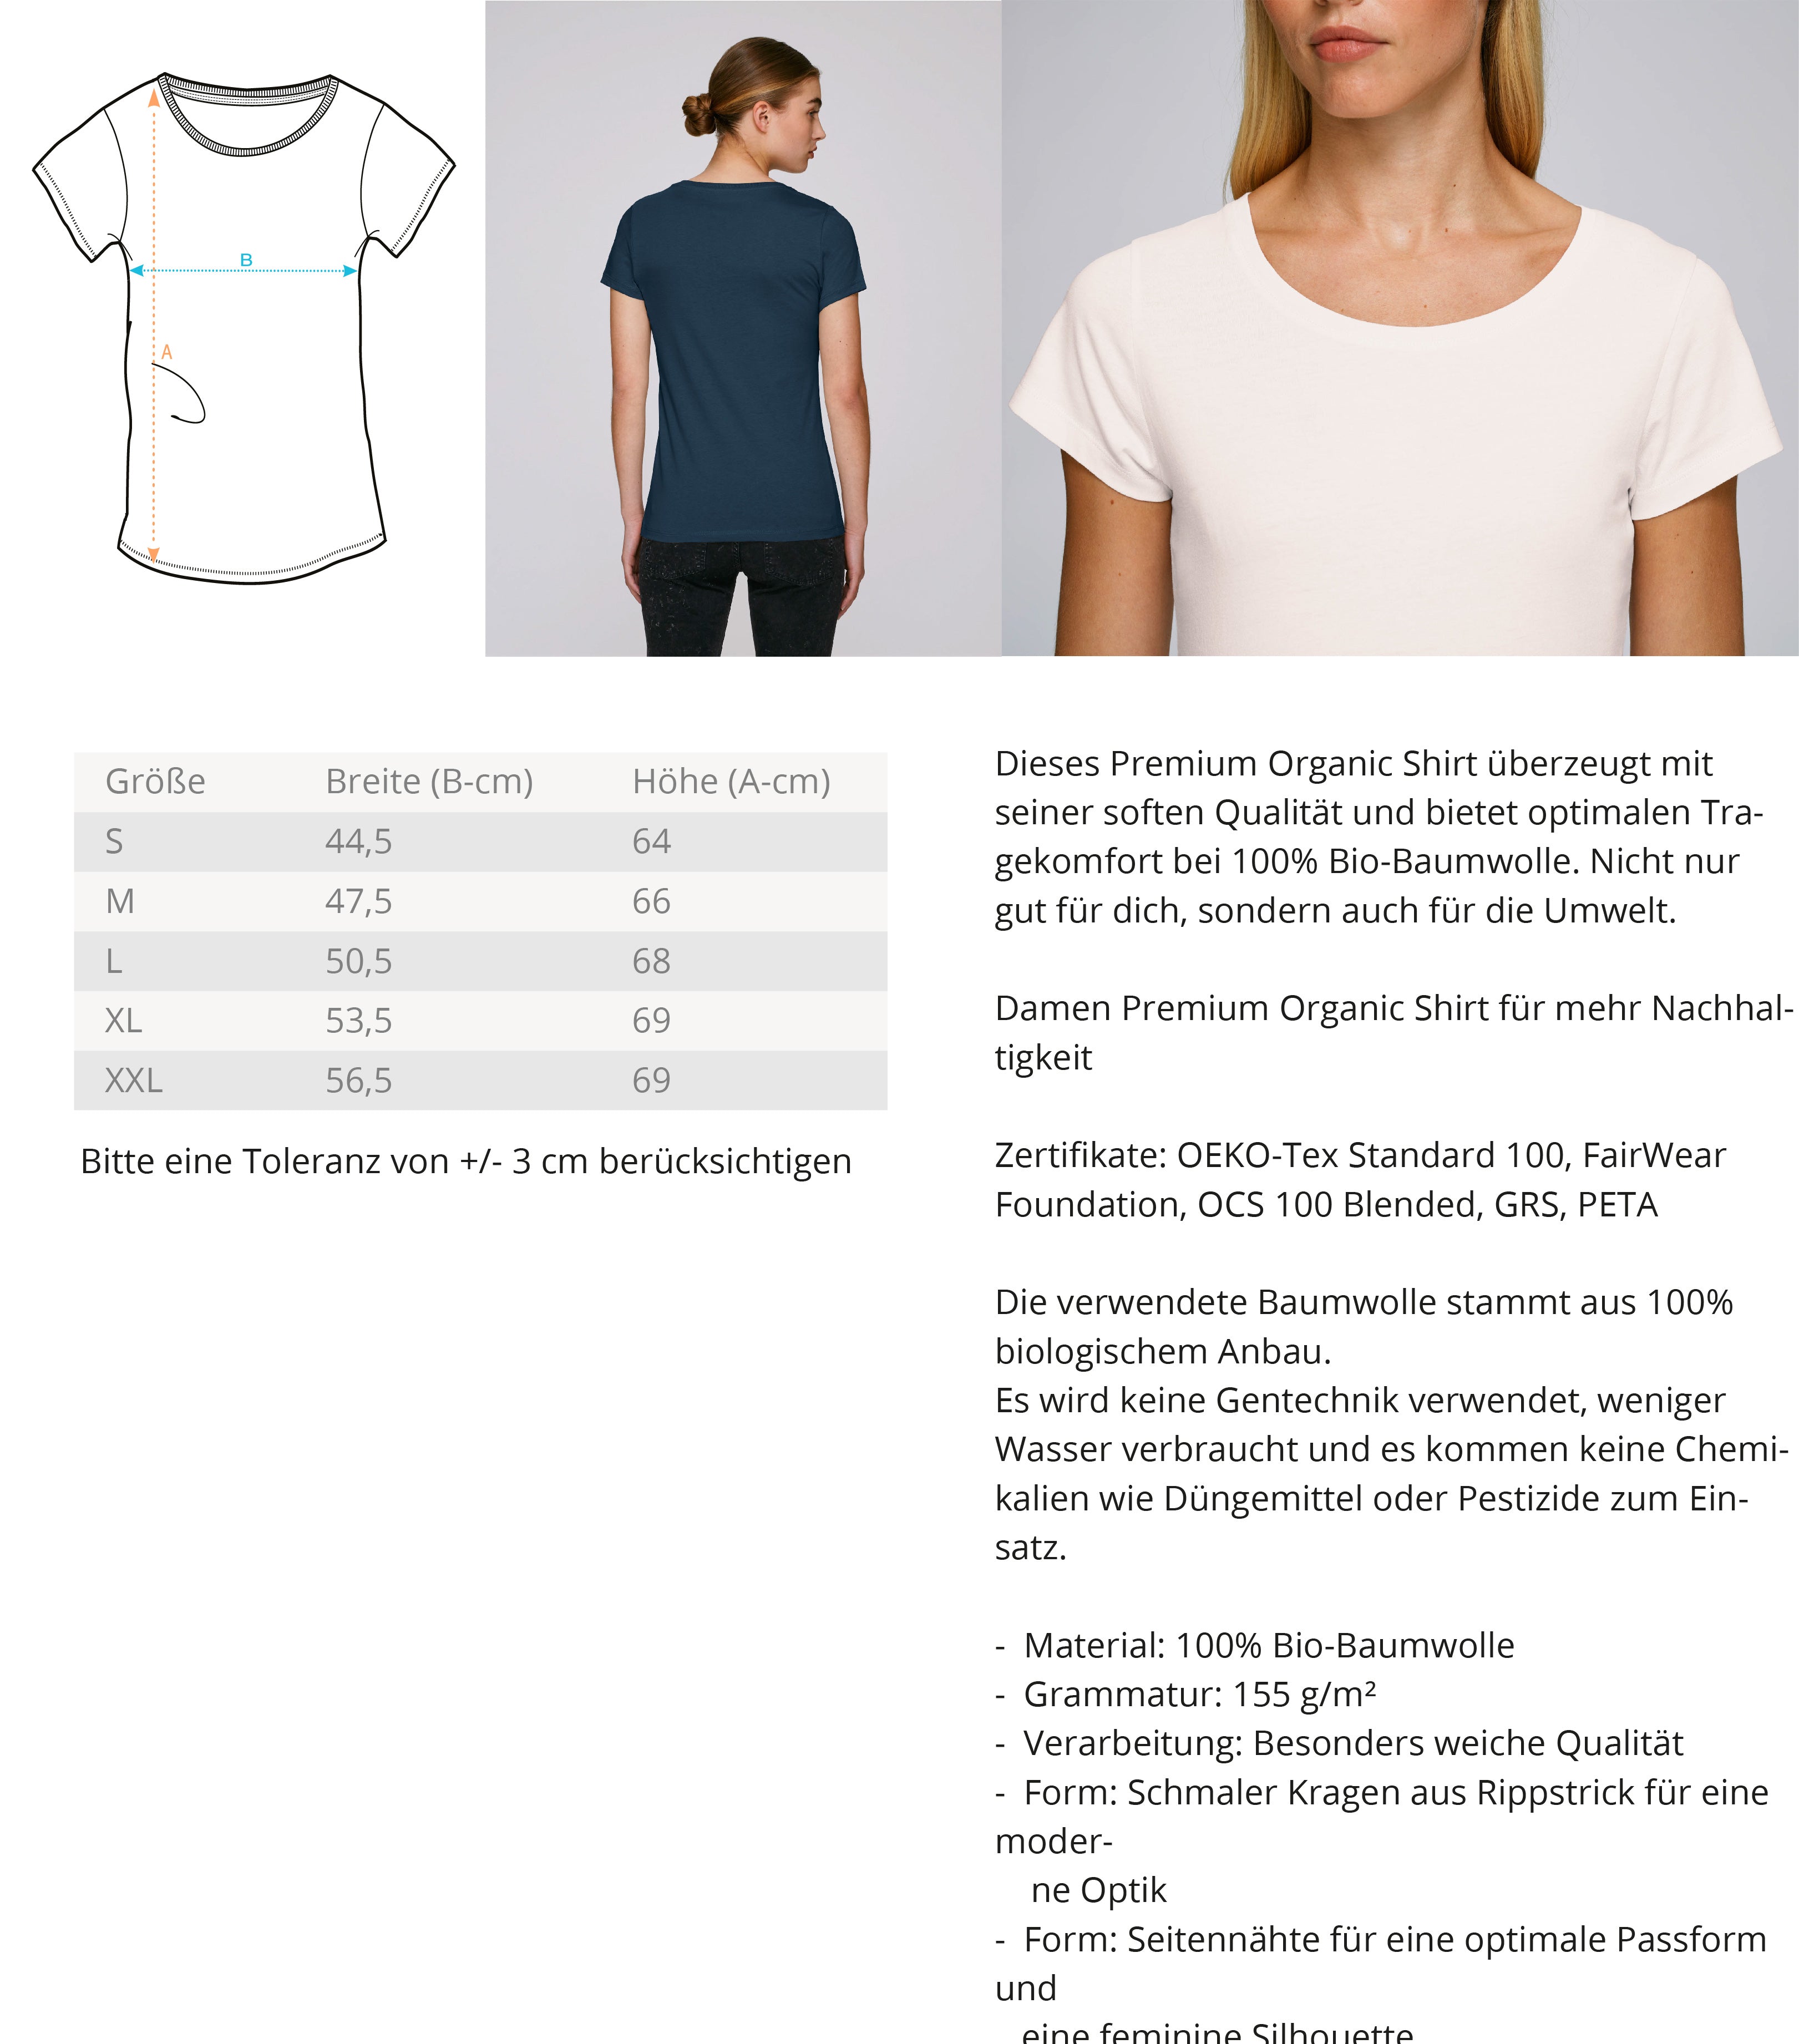 Pusteträumchen  - Damen Premium Organic Shirt